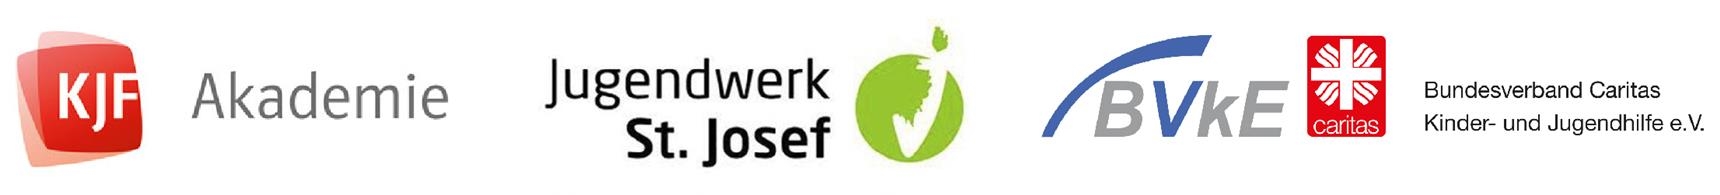 Logo_St. Josef_KJF_Akademie_BVkE